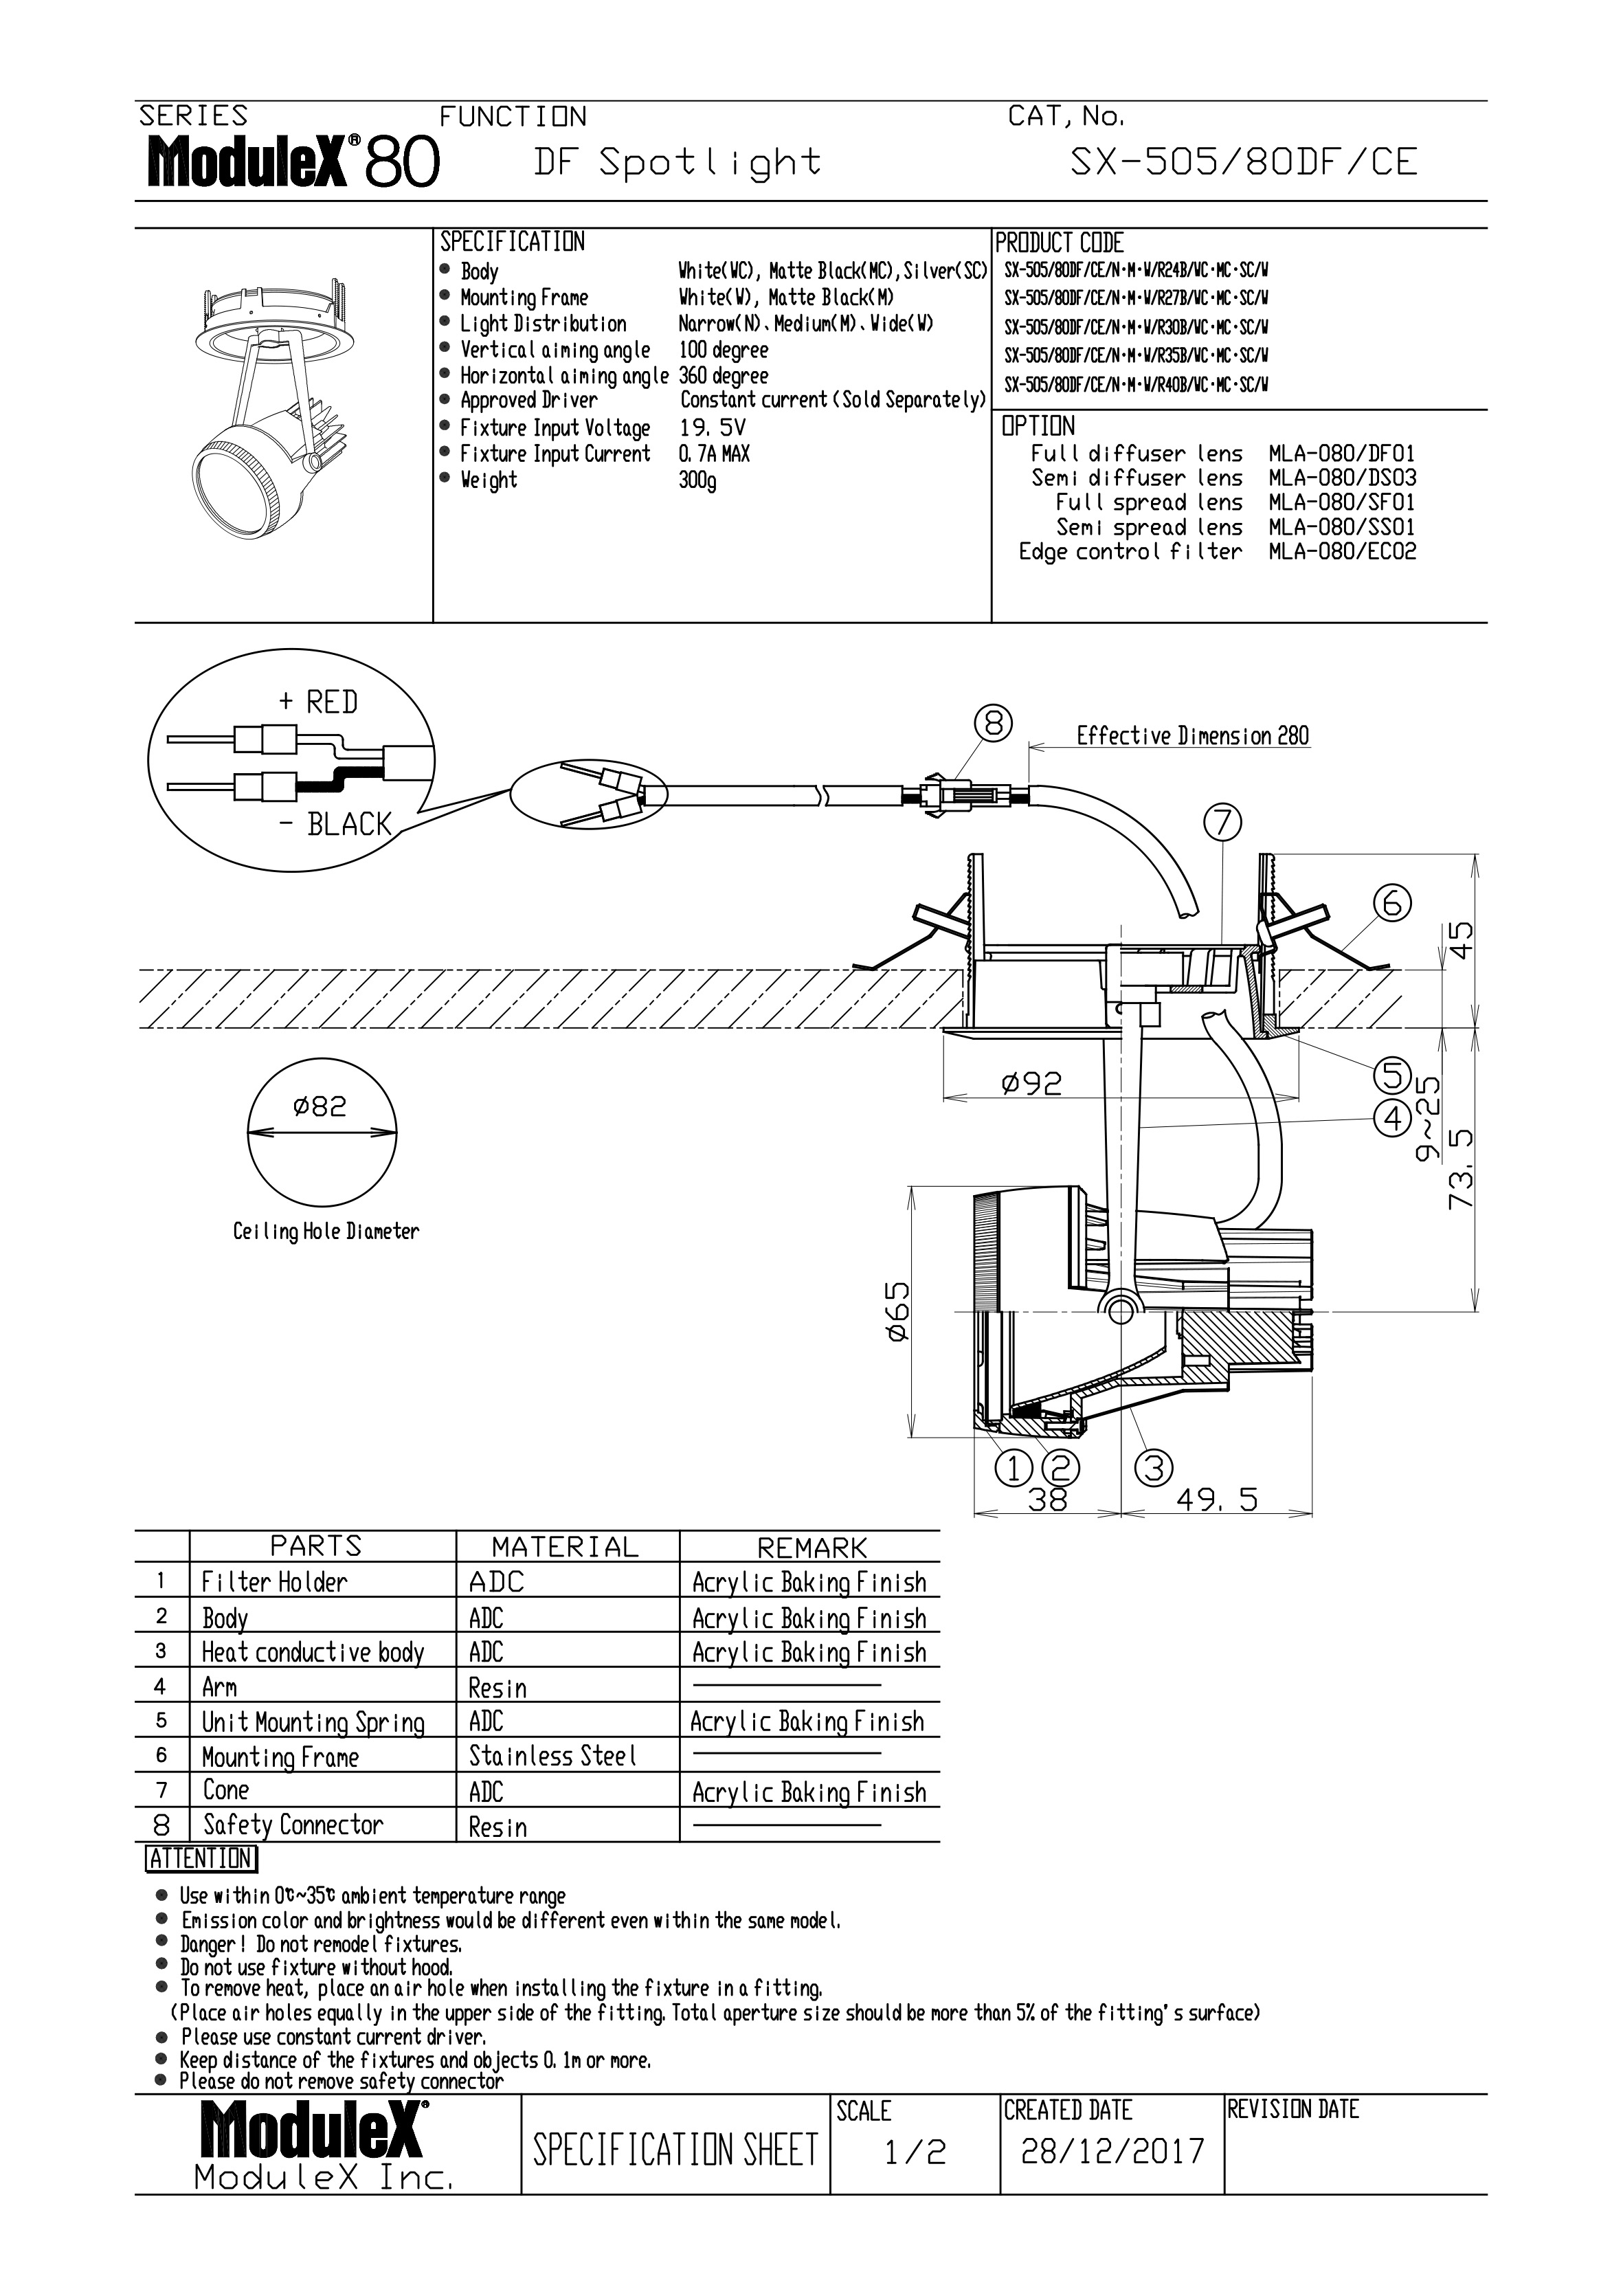 SX-505/80DF Specification Sheet